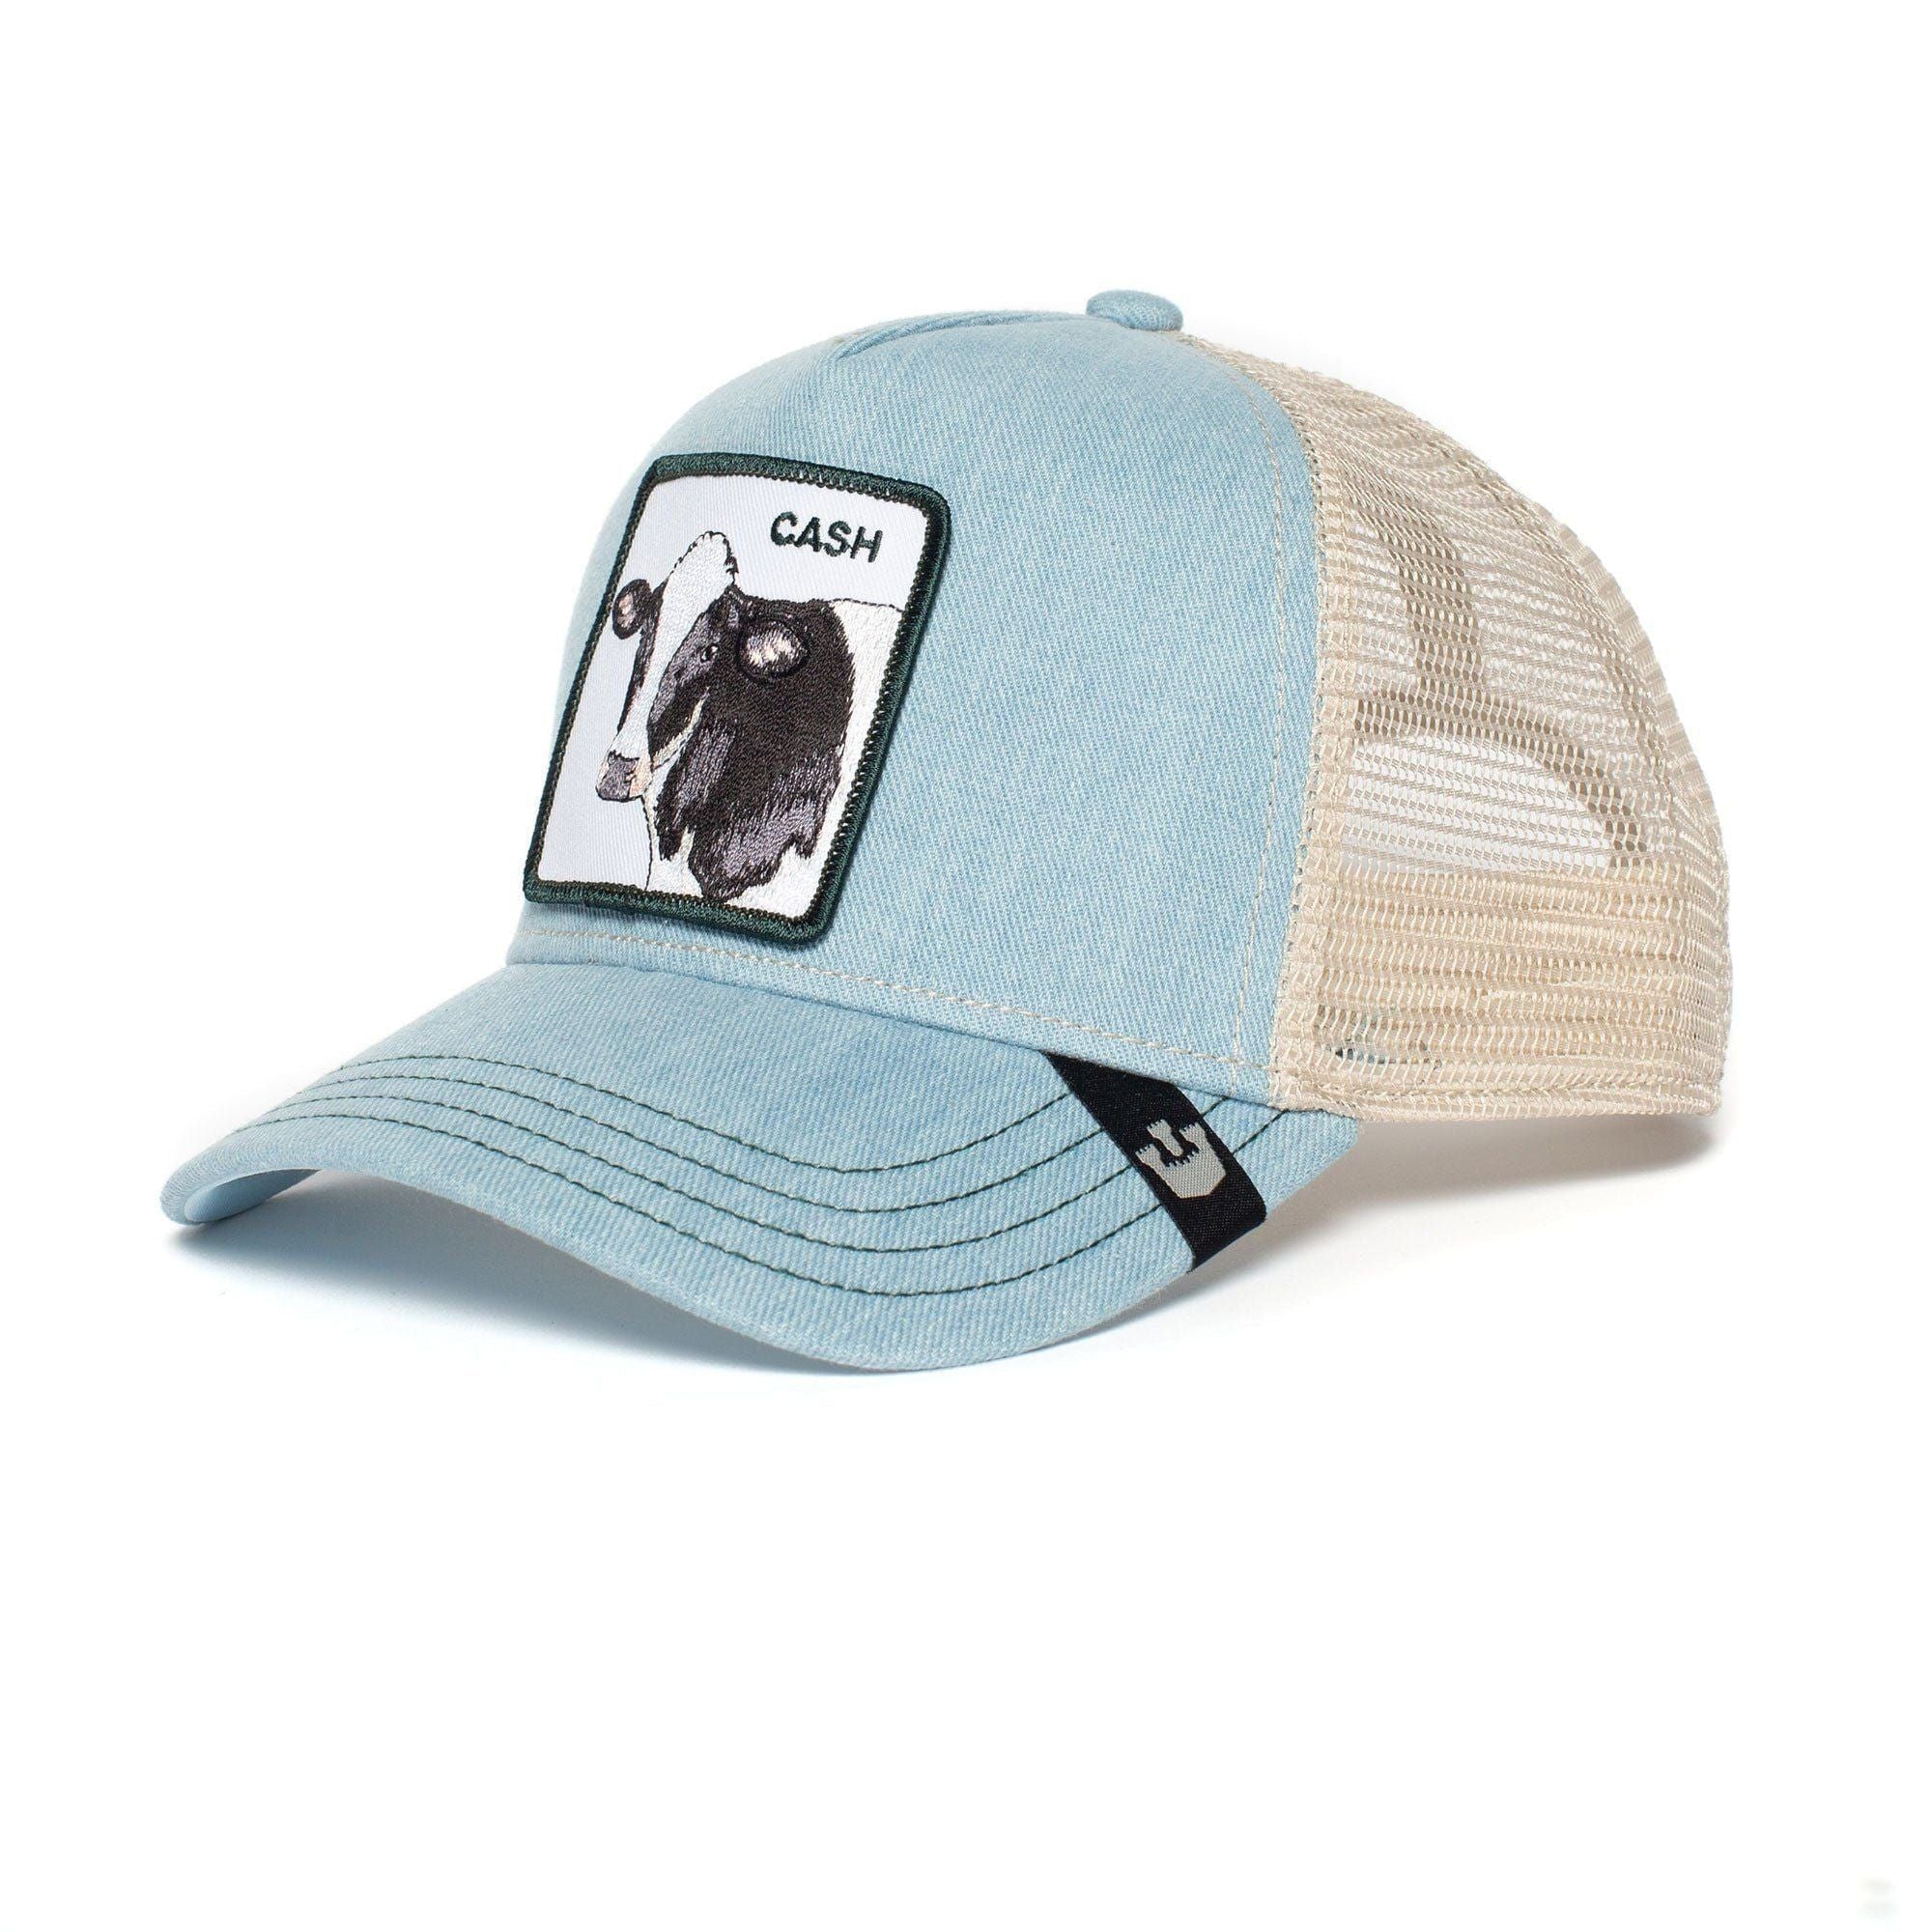 Goorin Blue Goorin Cash Cow Trucker Hat